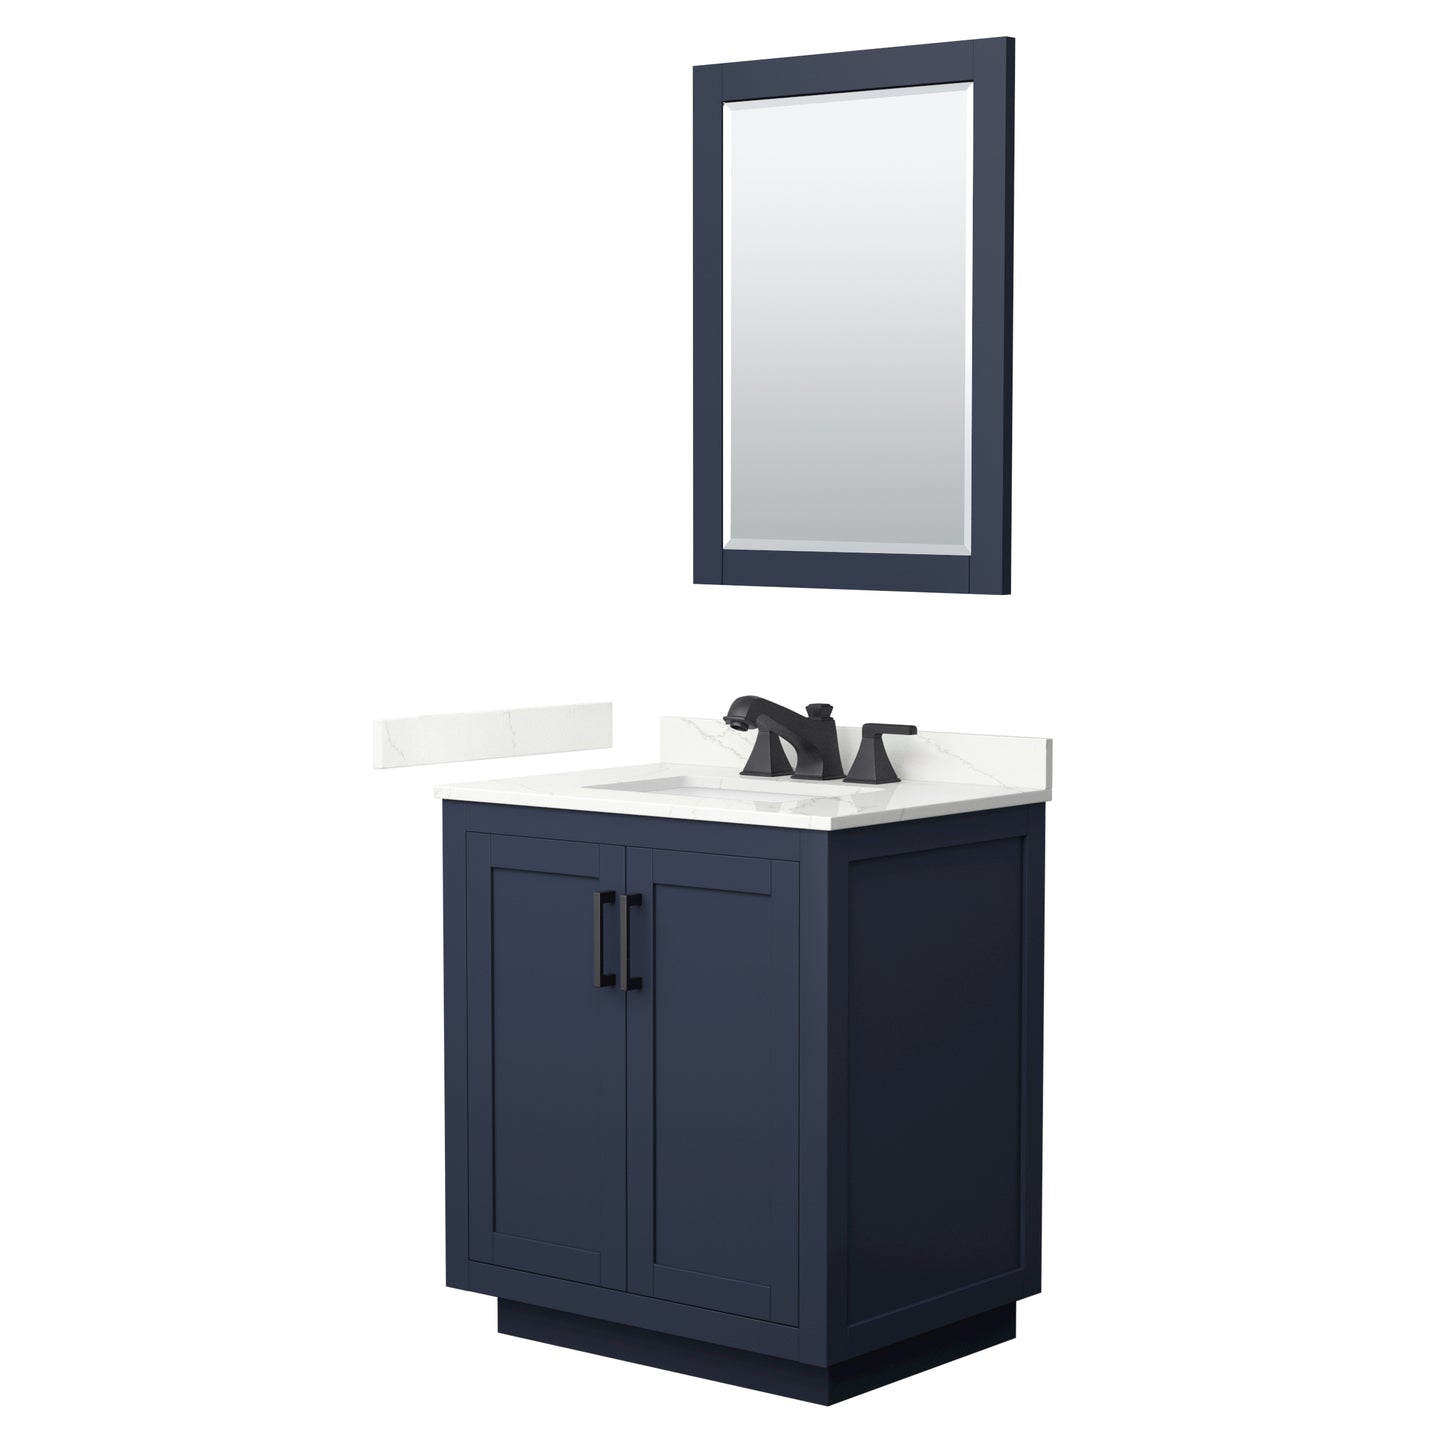 Wyndham Miranda 30 Inch Single Bathroom Vanity in Dark Blue, Quartz Countertop, Undermount Square Sink, Matte Black Trim - Luxe Bathroom Vanities